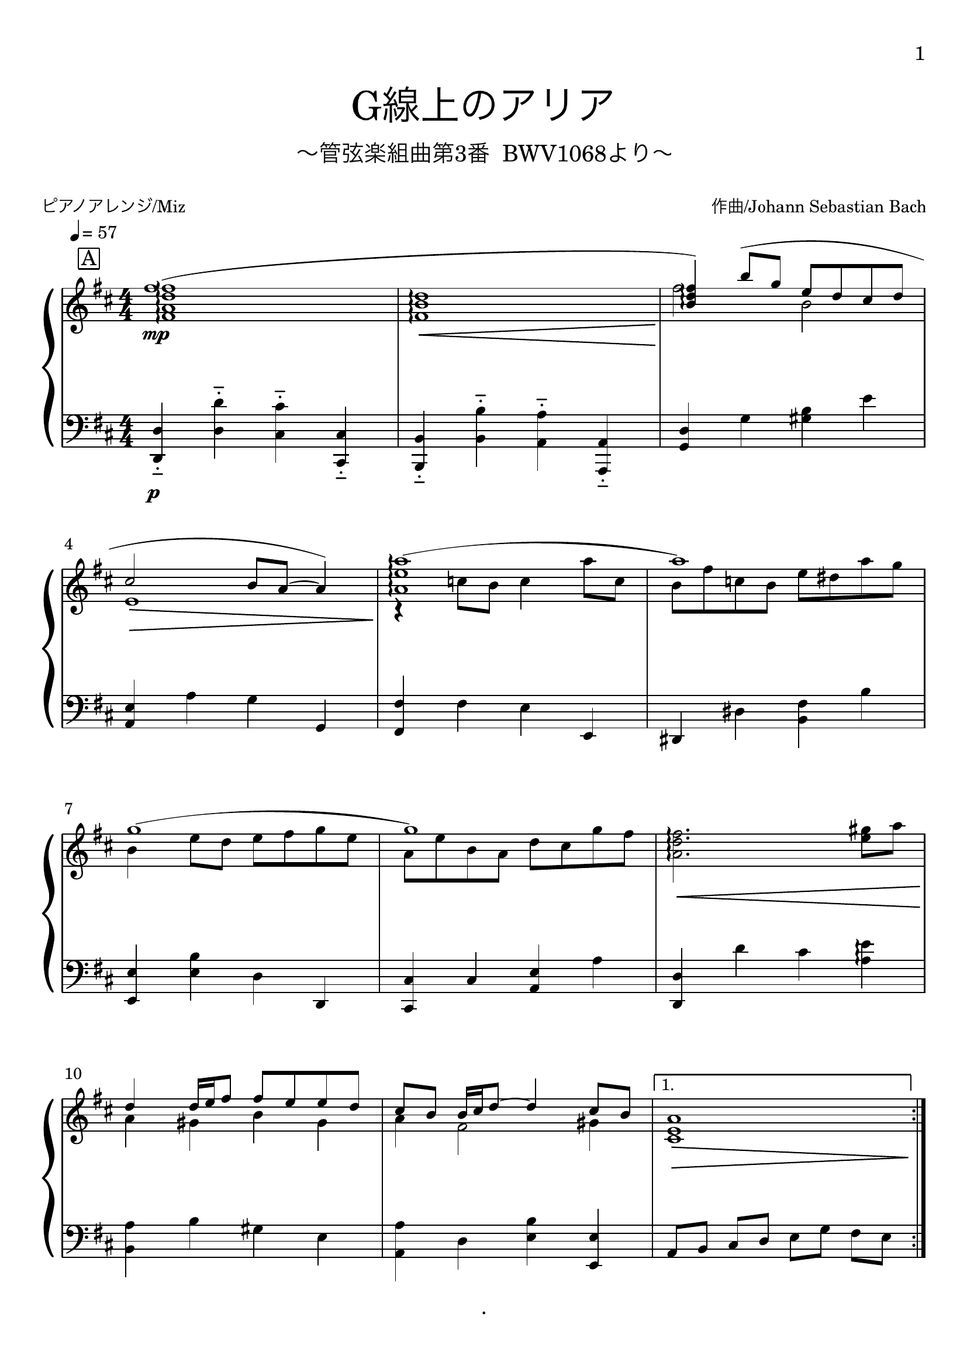 J.S.Bach - Ｇ線上のアリア /Air on the G String (ピアノソロ) by Miz